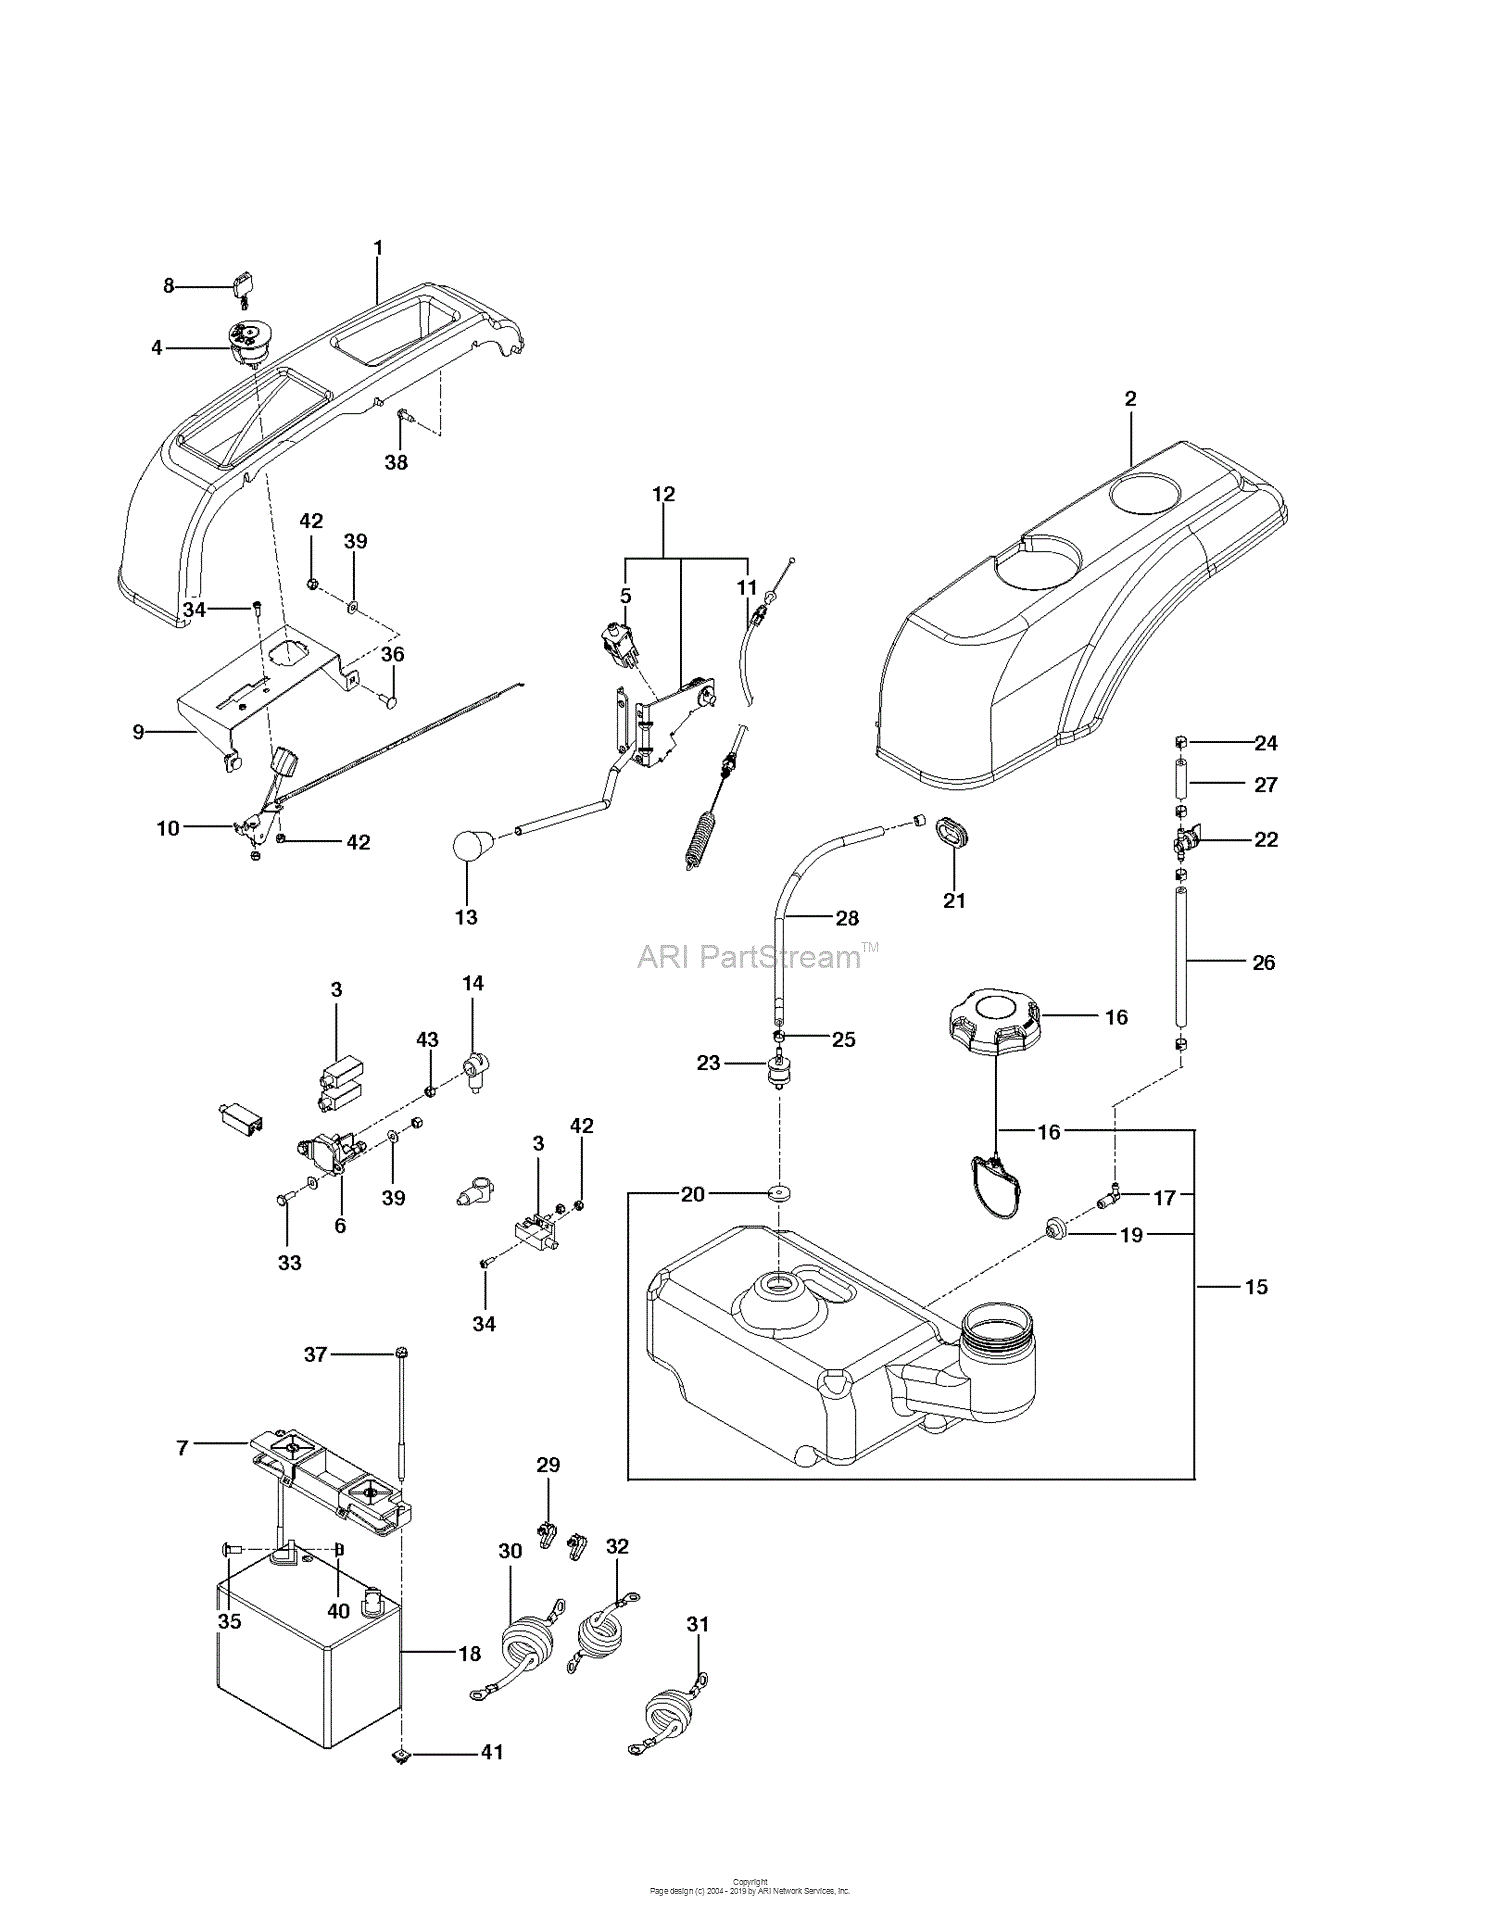 Dixon SPEEDZTR 30 BF - 966676101 (2013-08) Parts Diagram for FUEL SYSTEM